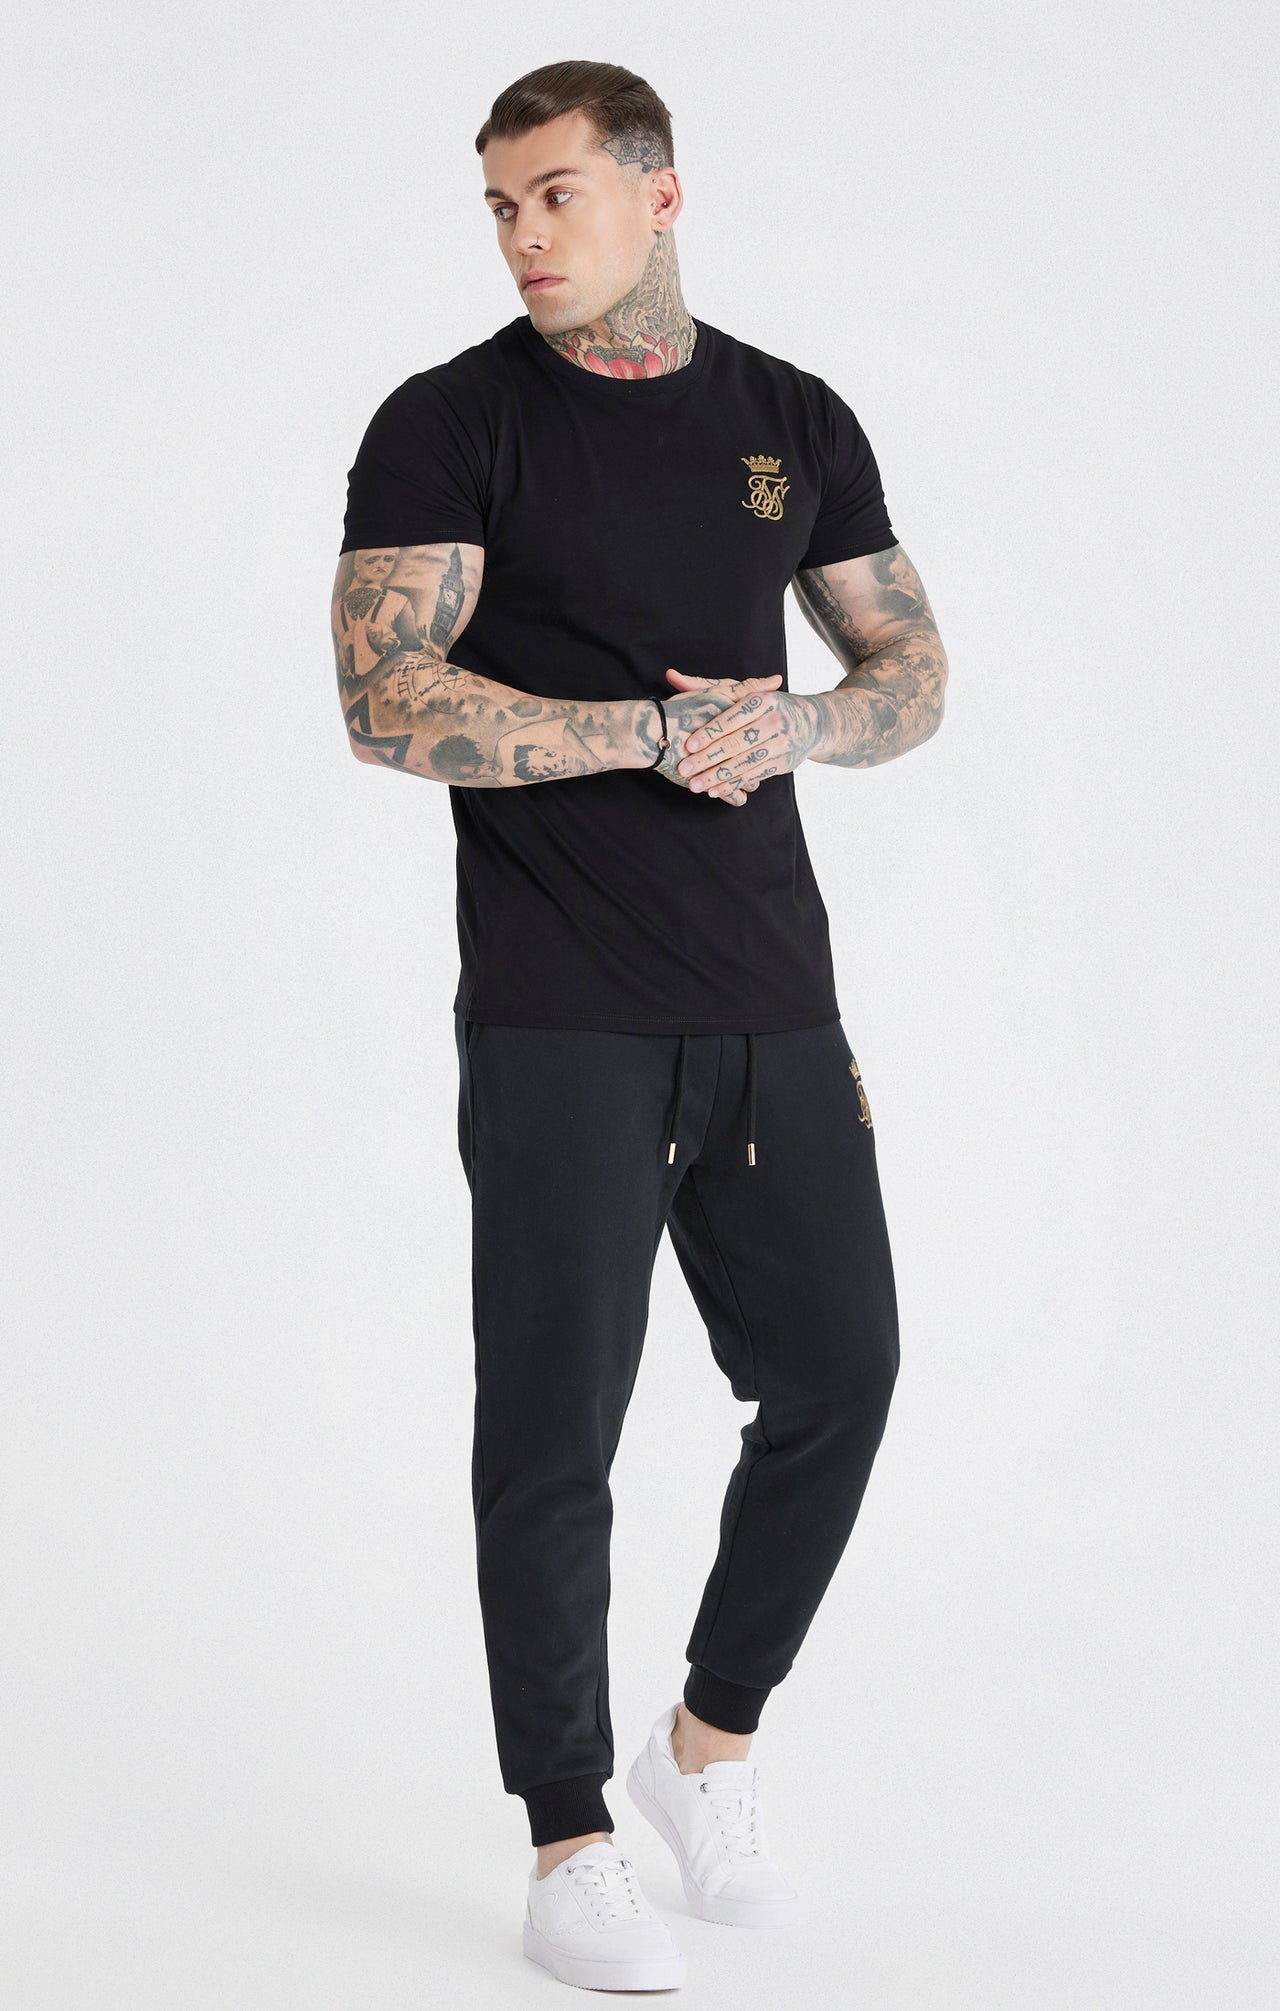 Messi x SikSilk Black Muscle Fit T-Shirt (1)